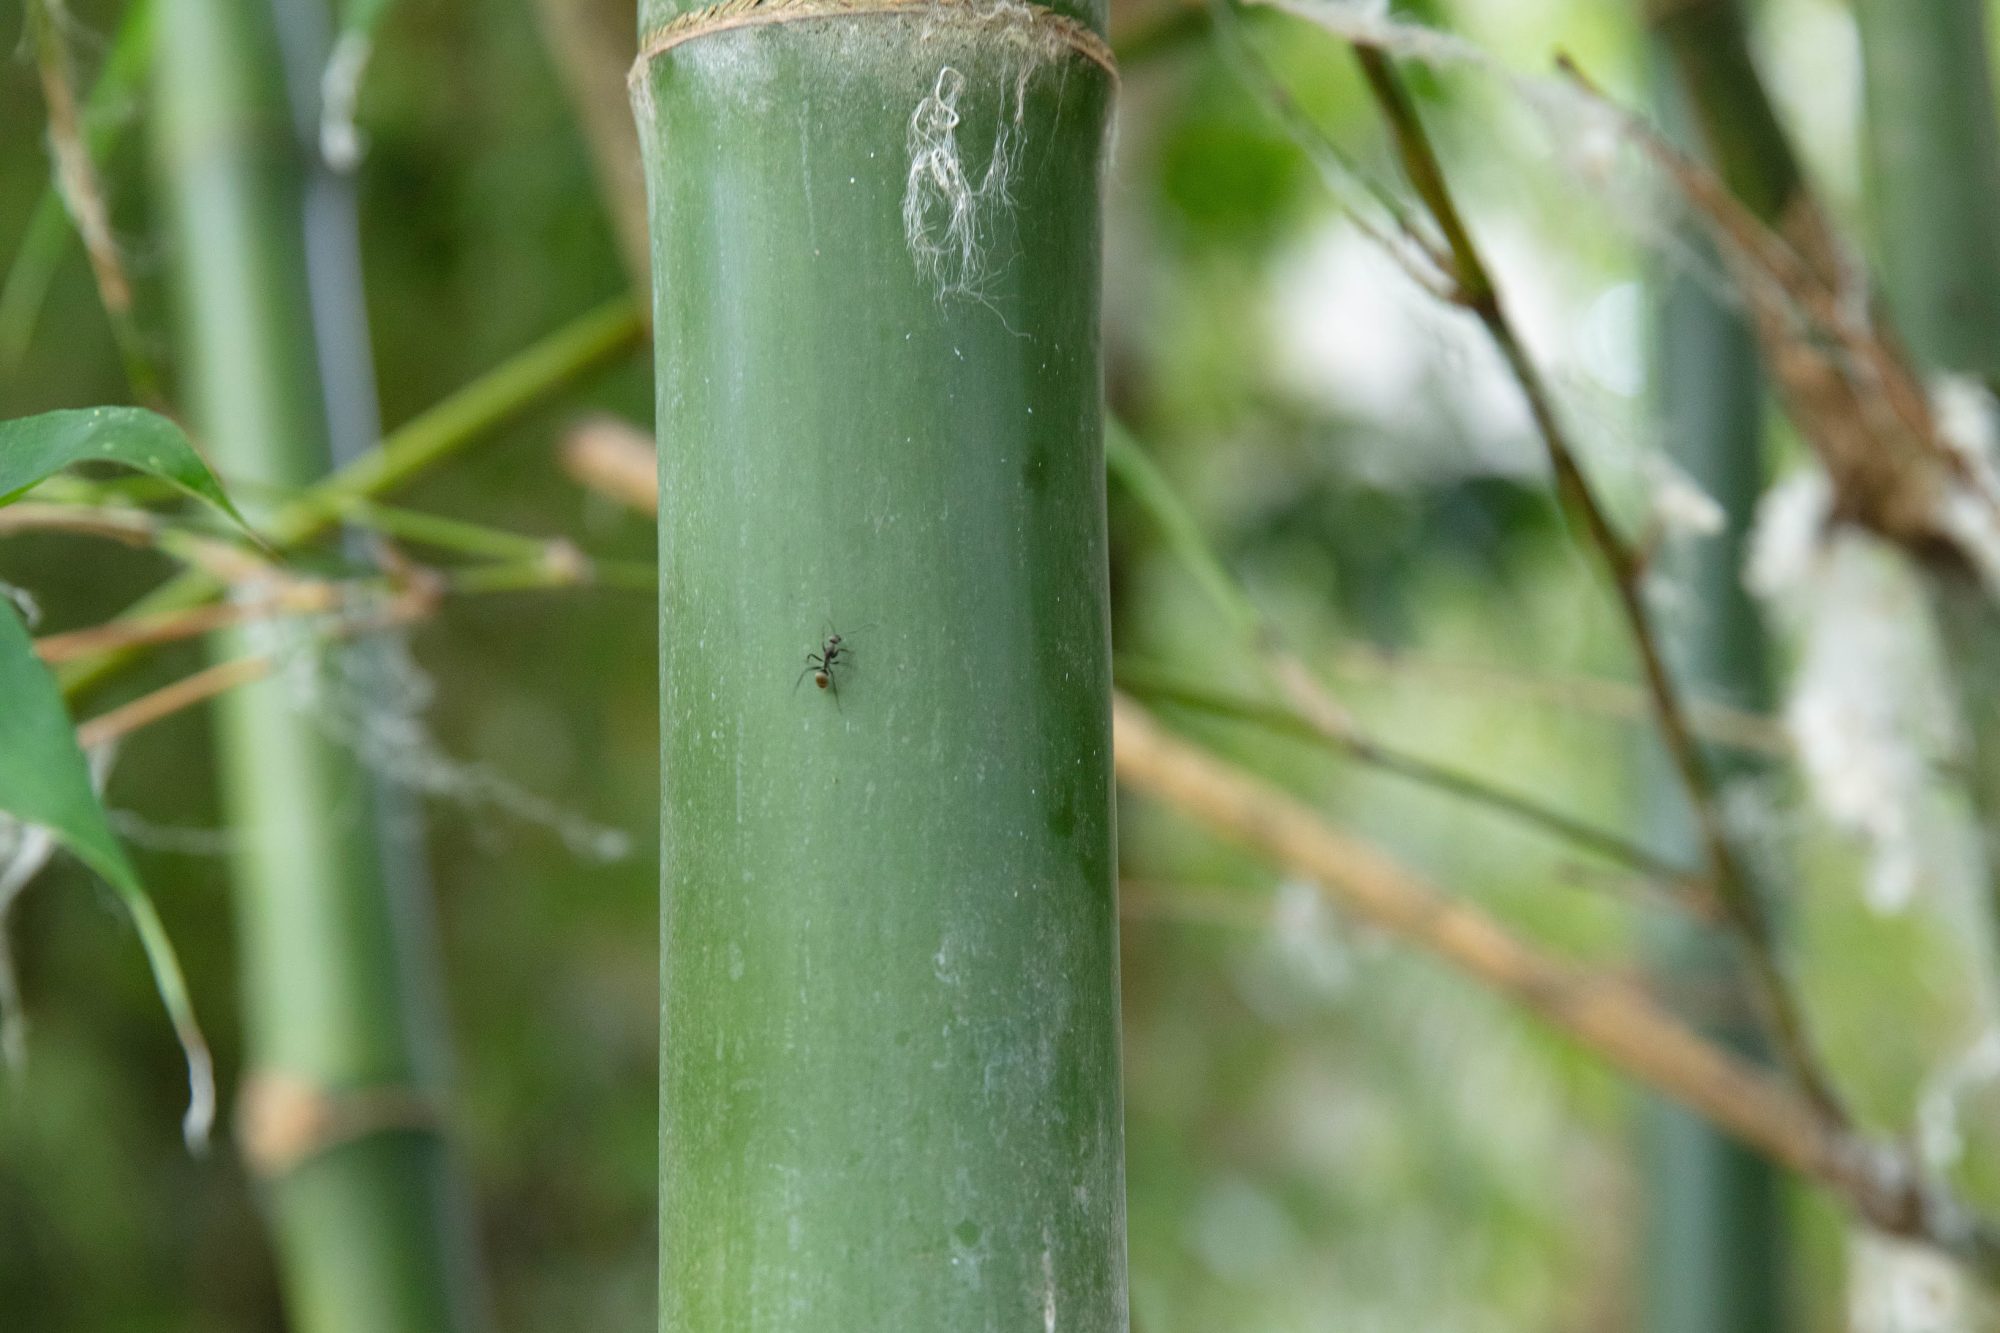 Ant-closeup-1-crop